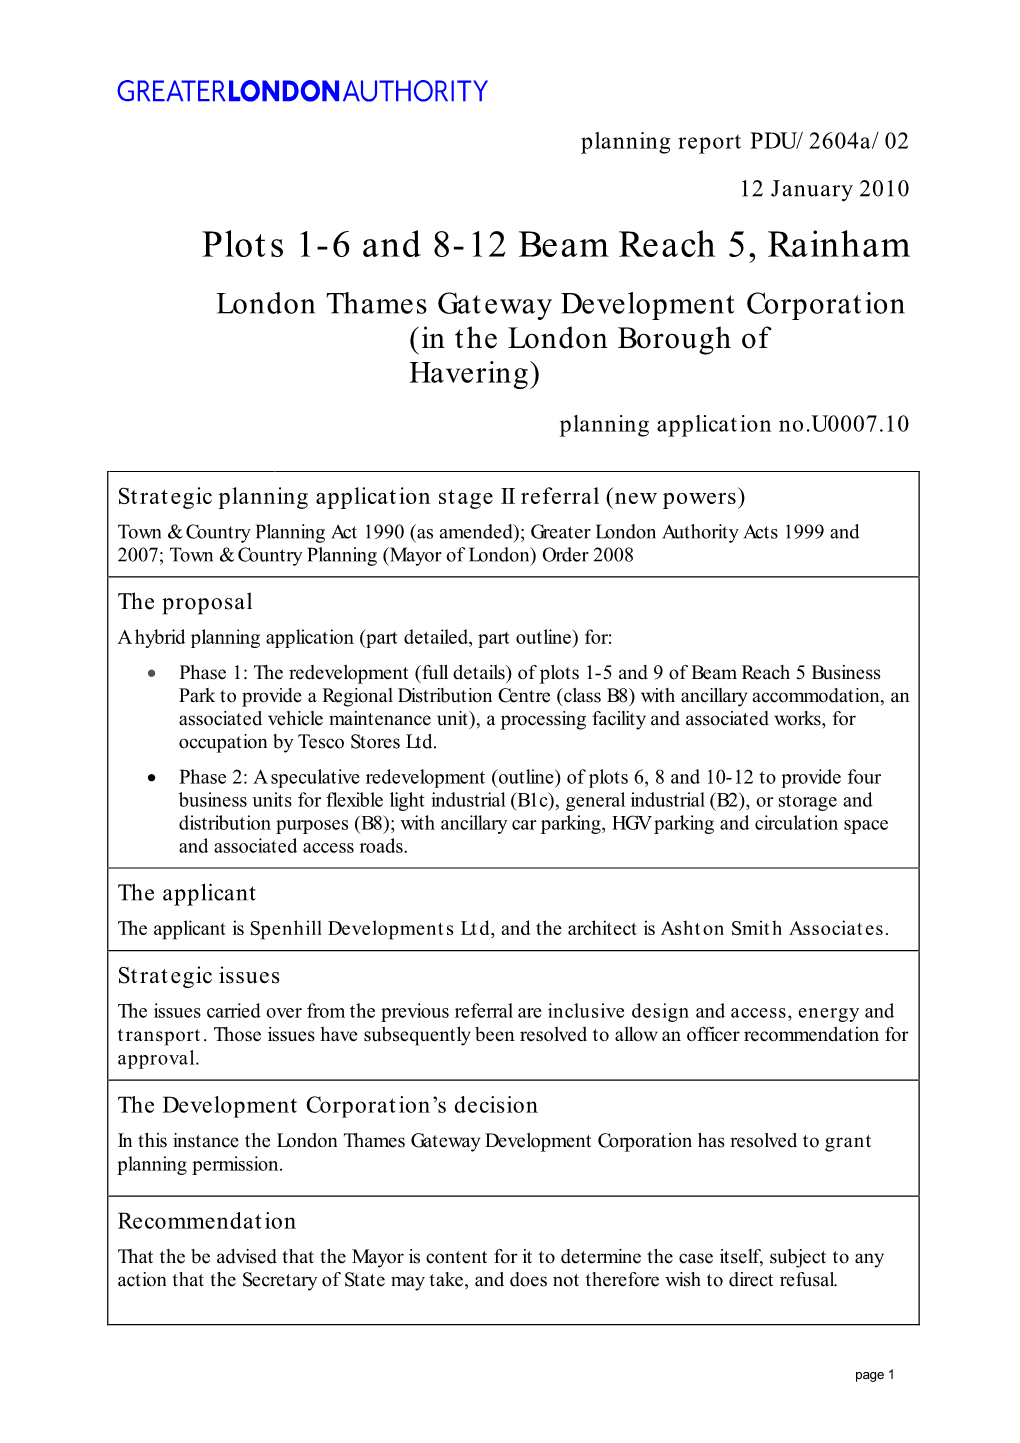 Plots 1-6 and 8-12 Beam Reach 5, Rainham London Thames Gateway Development Corporation (In the London Borough of Havering) Planning Application No.U0007.10